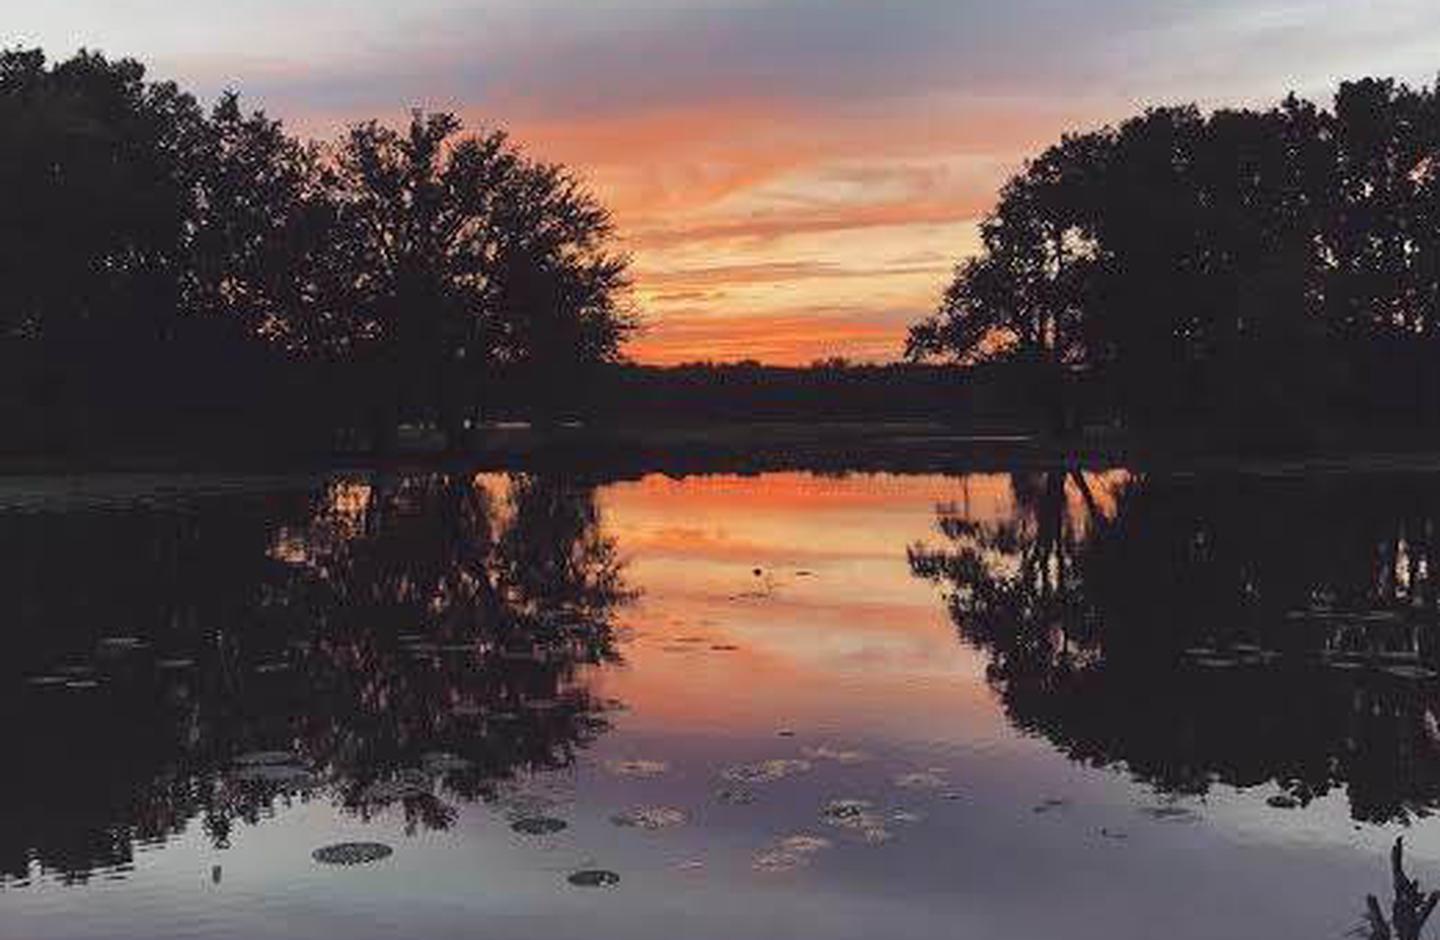 SunsetSunset along the banks of the Mississippi River at Blackhawk Park